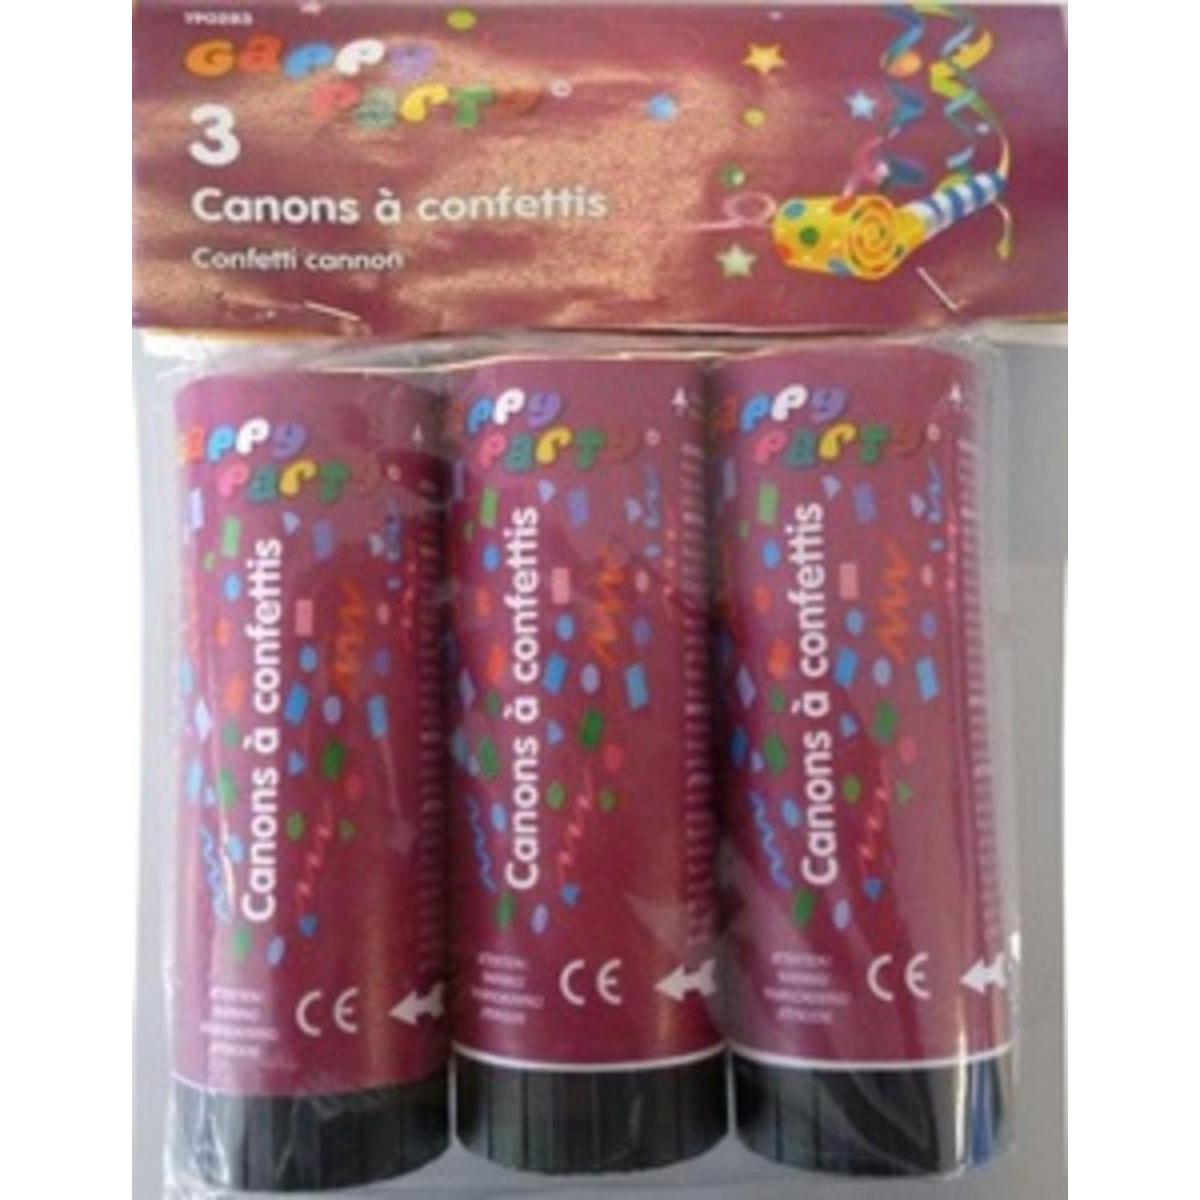 3 canons à confettis - H 11 cm - Multicolore